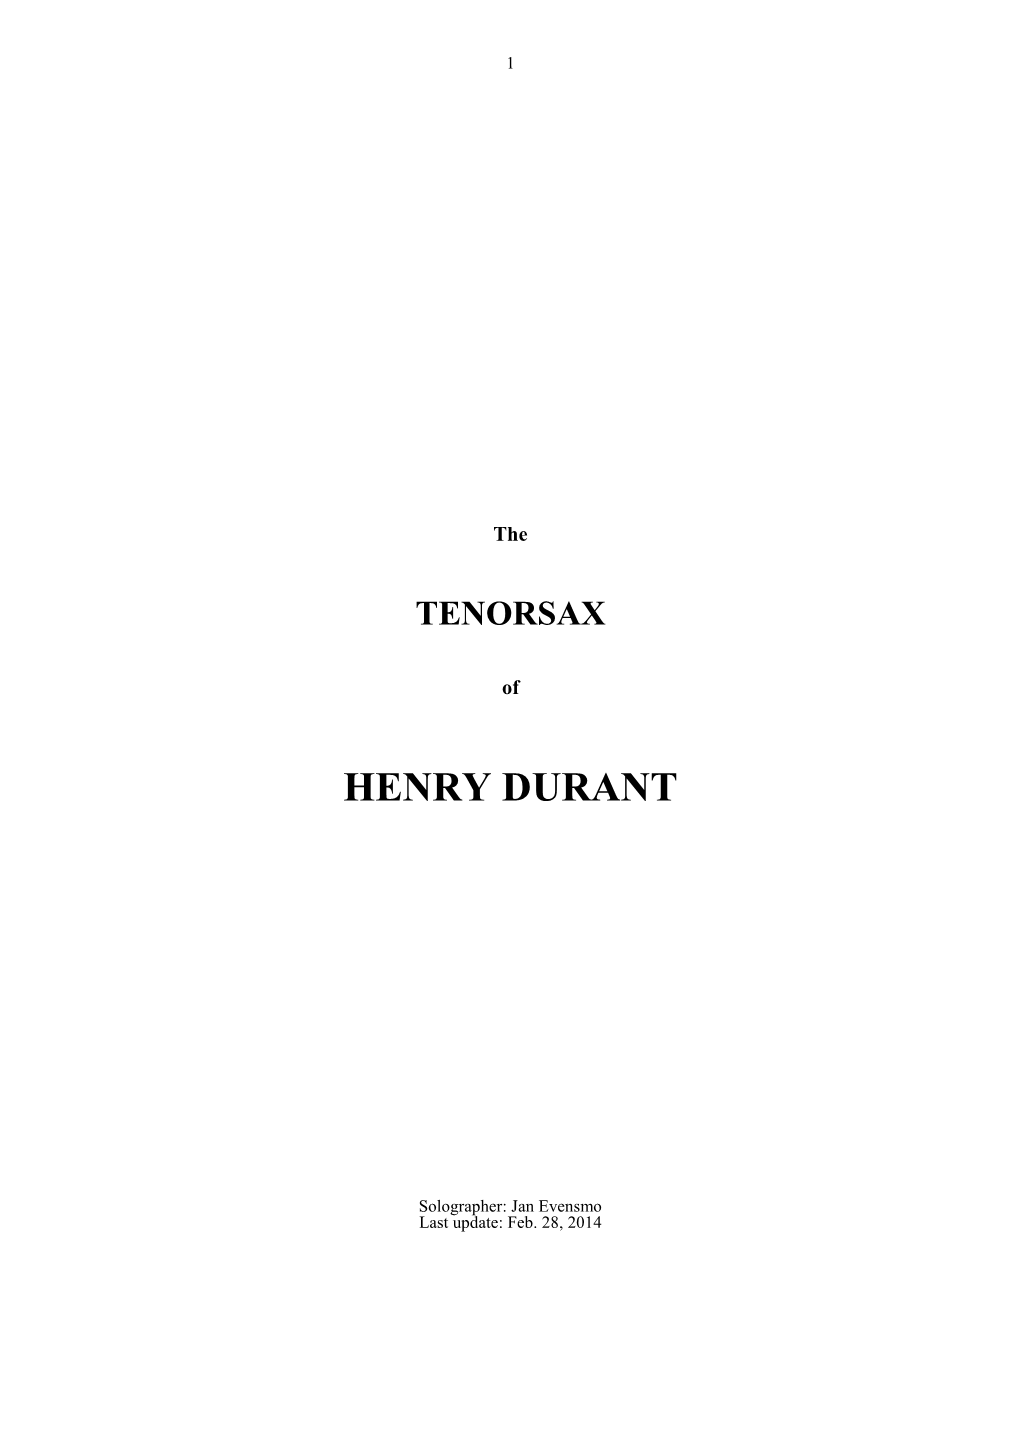 Henry Durant